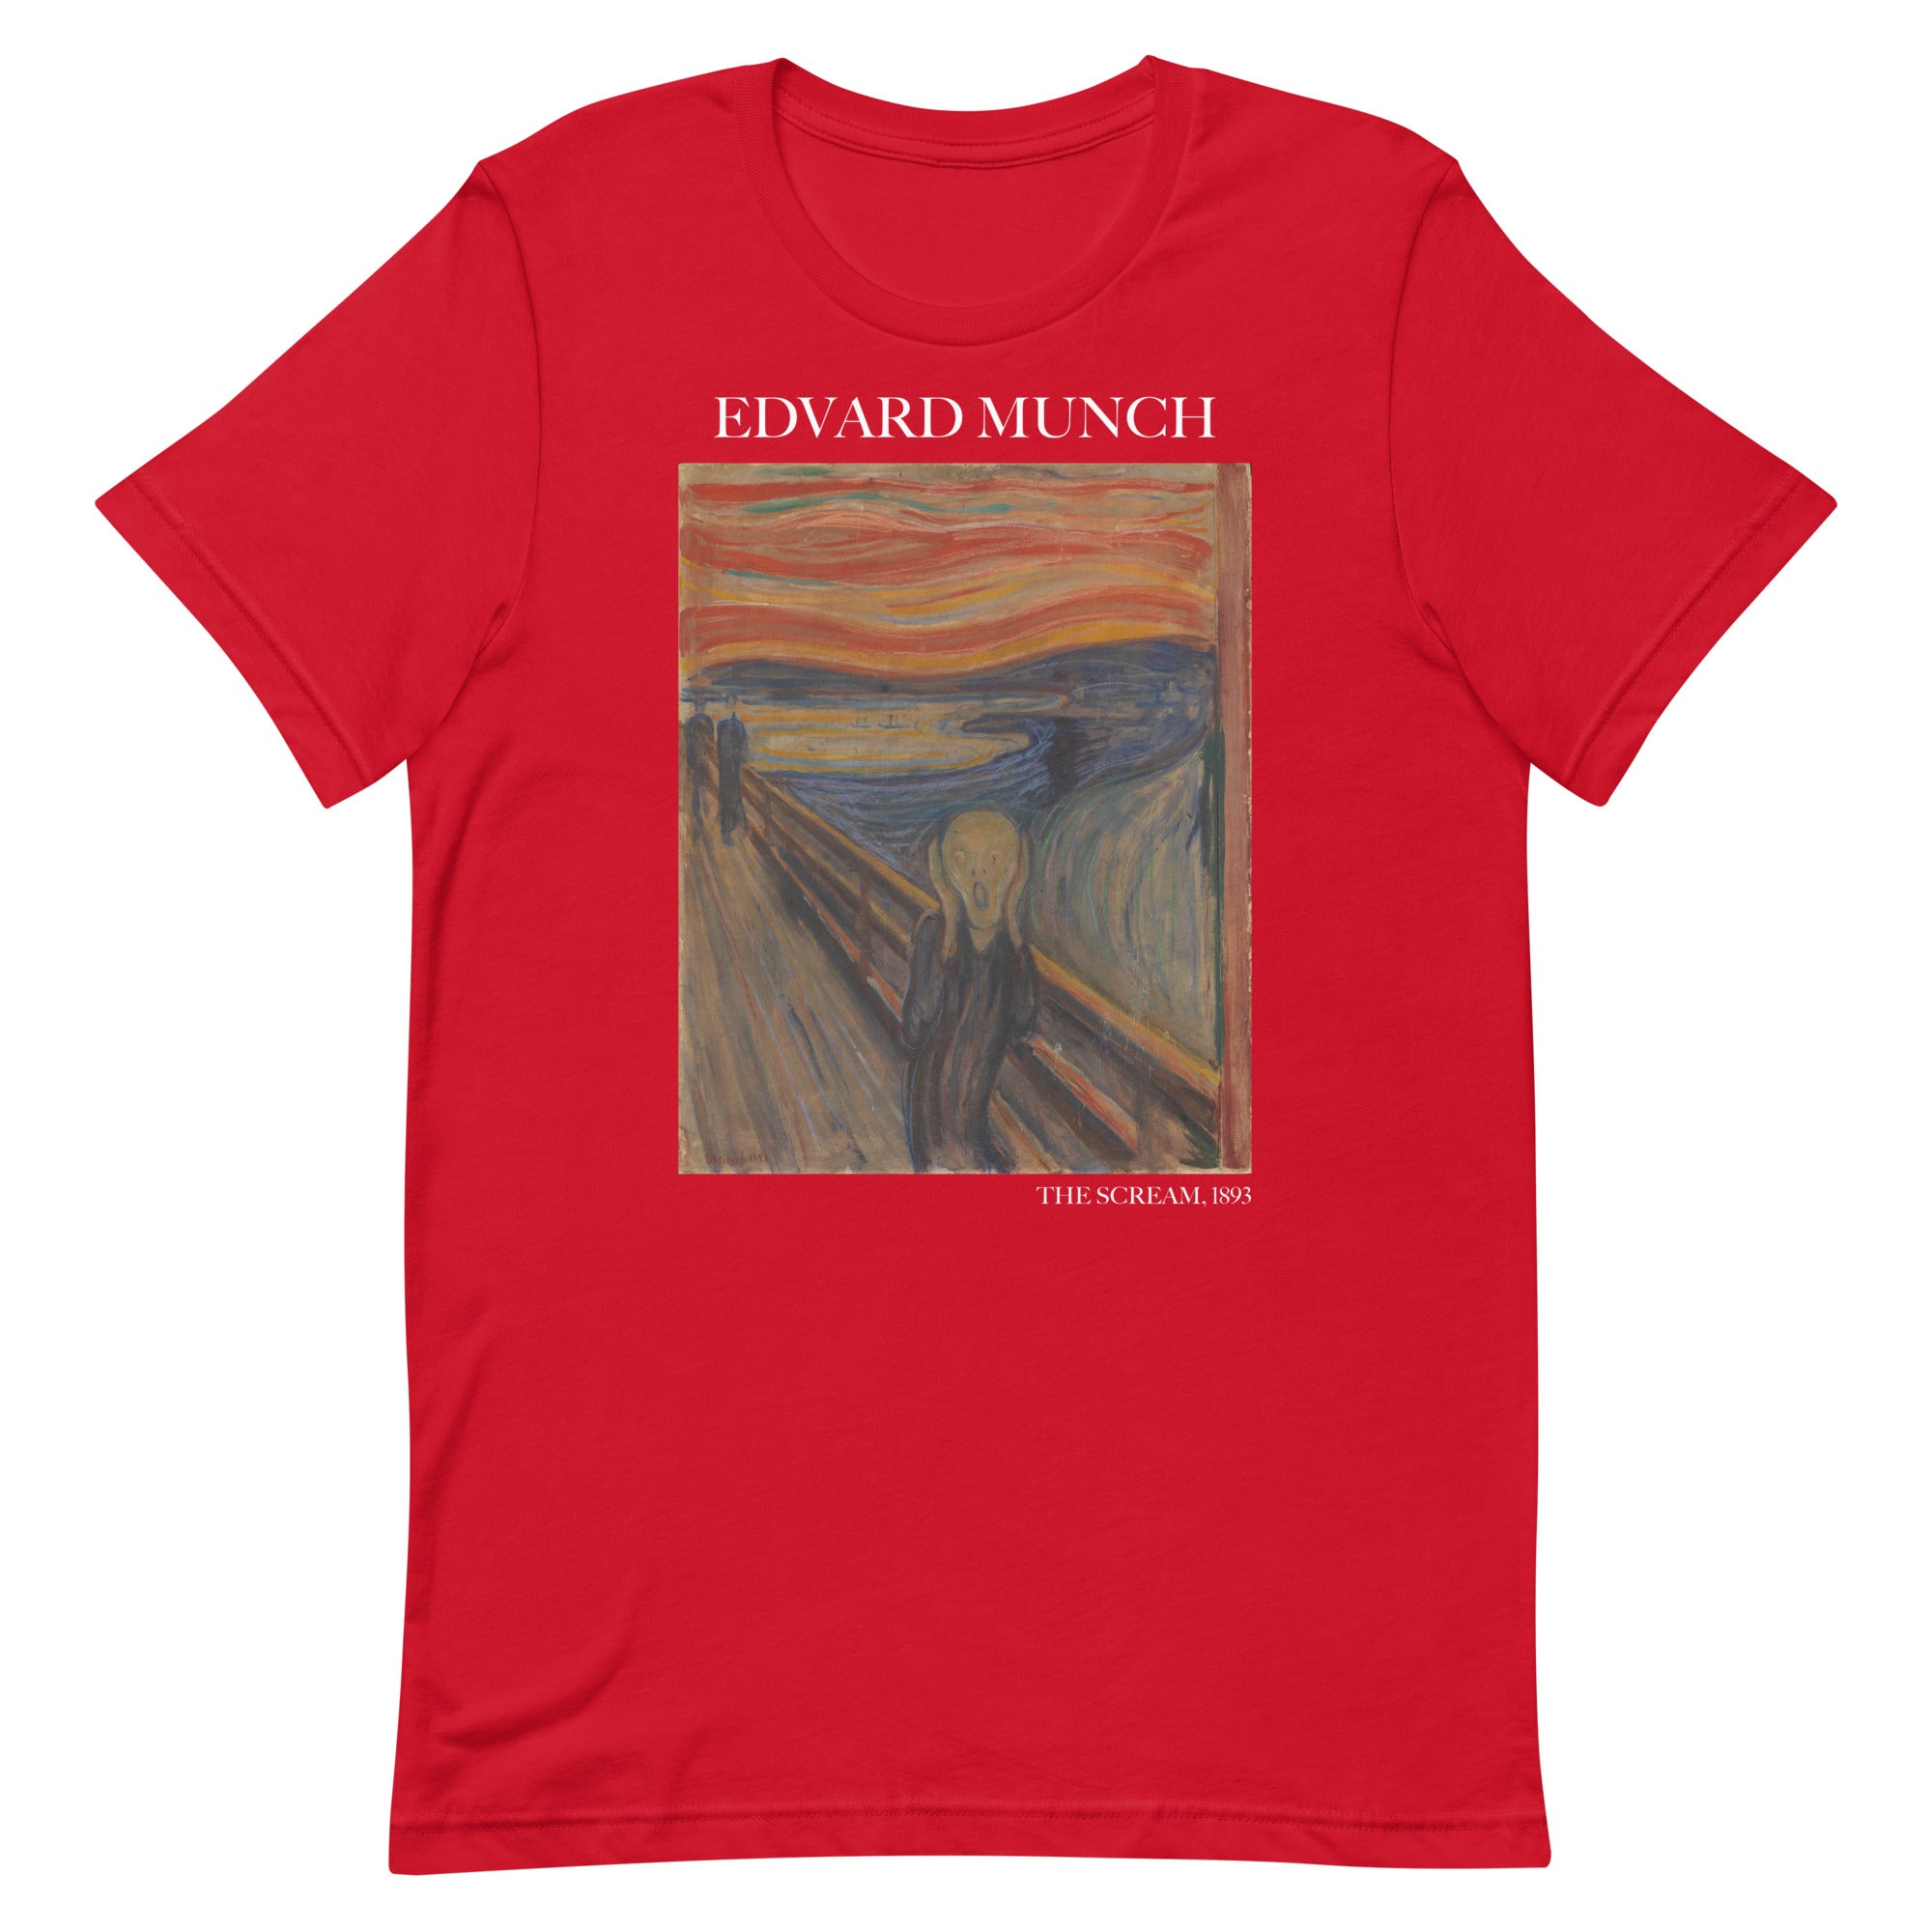 Edvard Munch 'The Scream' Famous Painting T-Shirt | Unisex Classic Art Tee